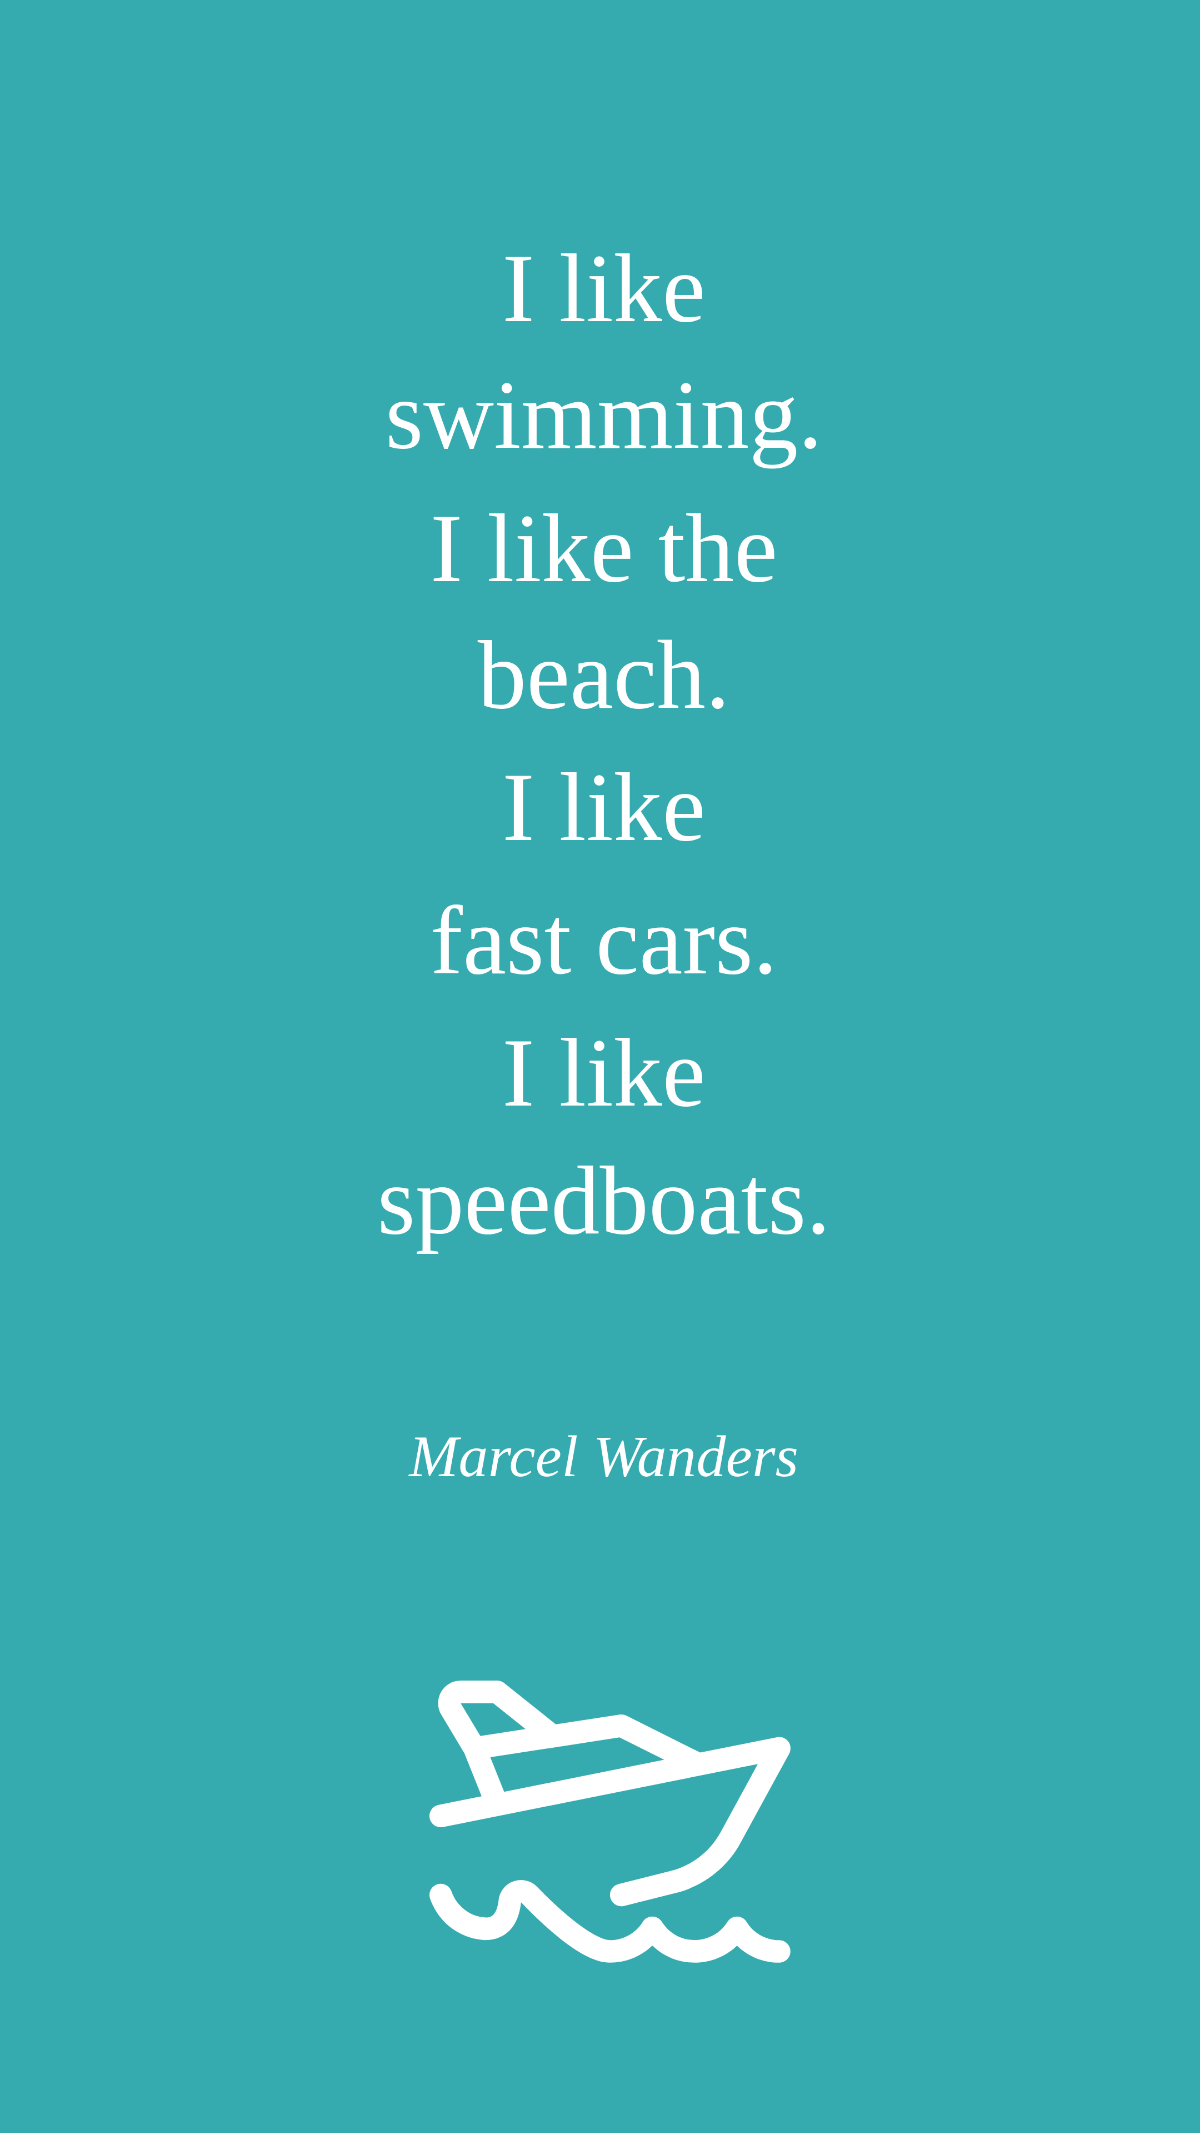 Marcel Wanders - I like swimming. I like the beach. I like fast cars. I like speedboats.